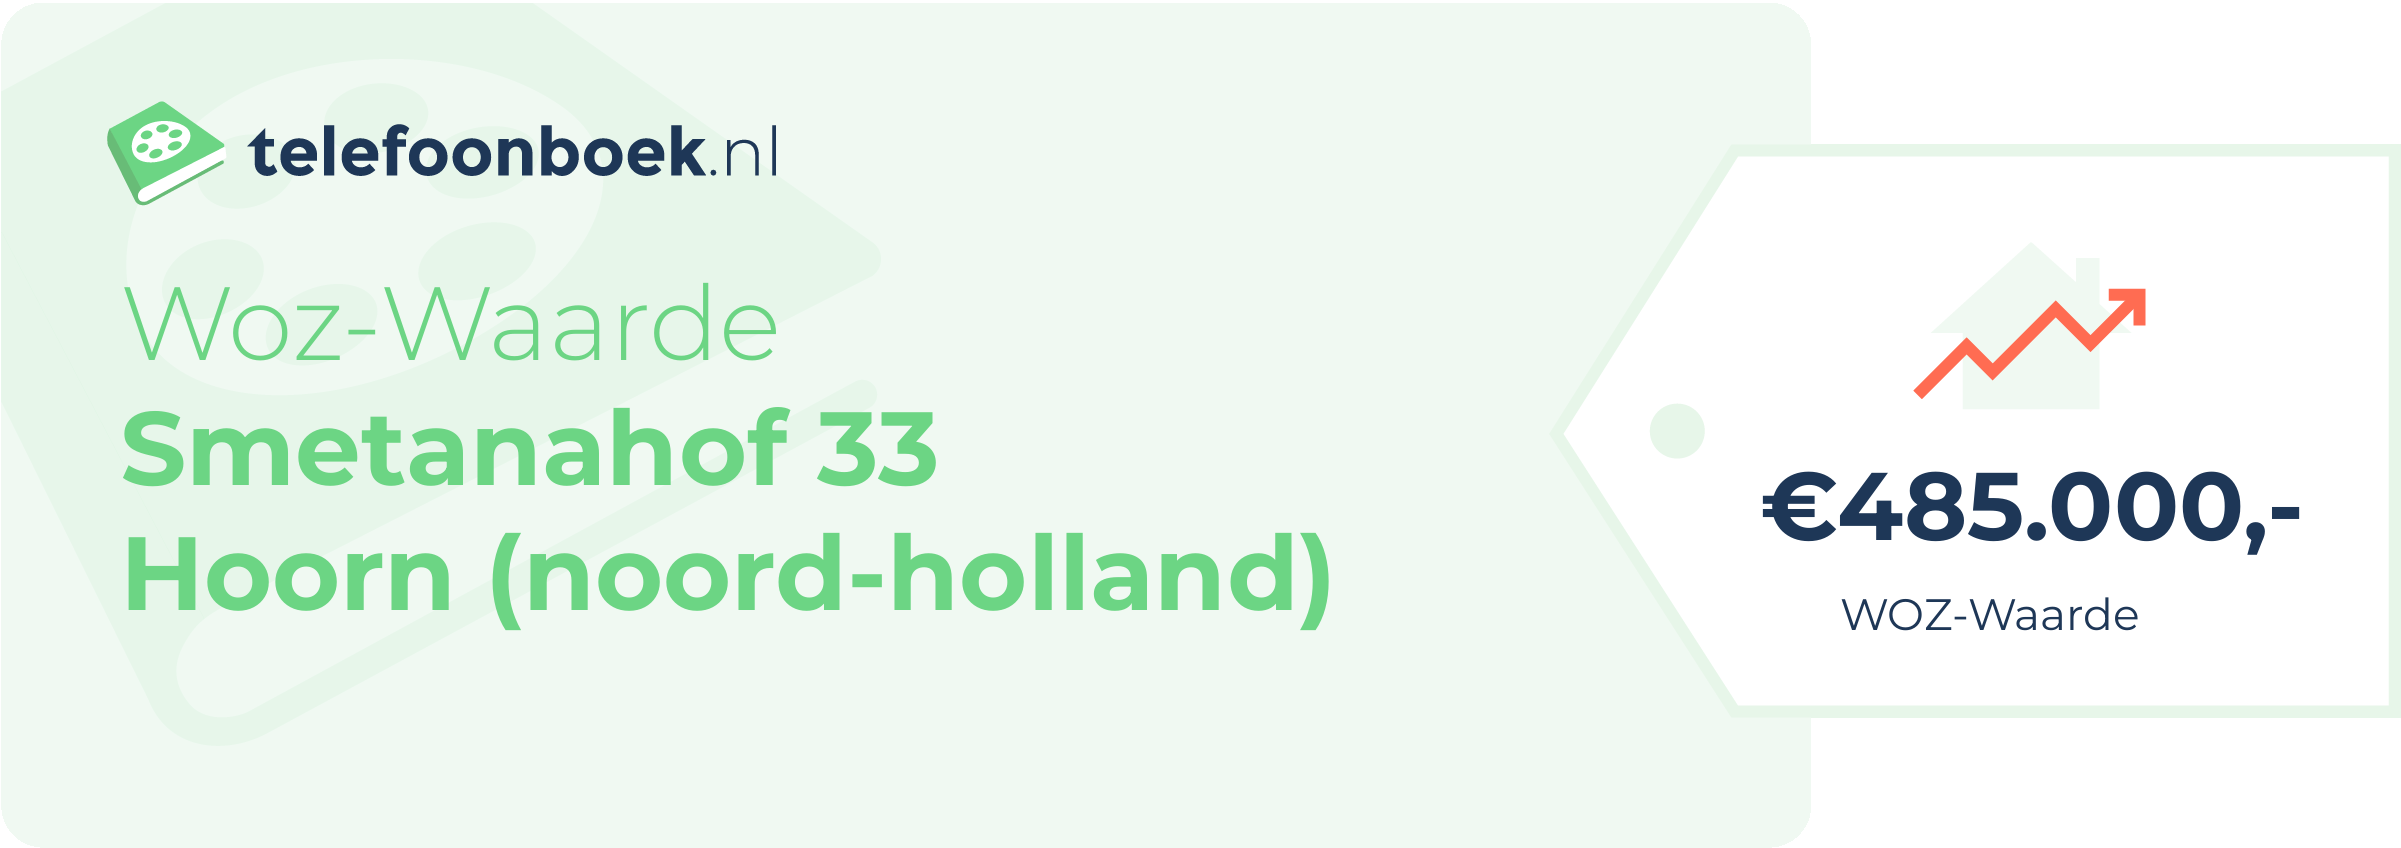 WOZ-waarde Smetanahof 33 Hoorn (Noord-Holland)